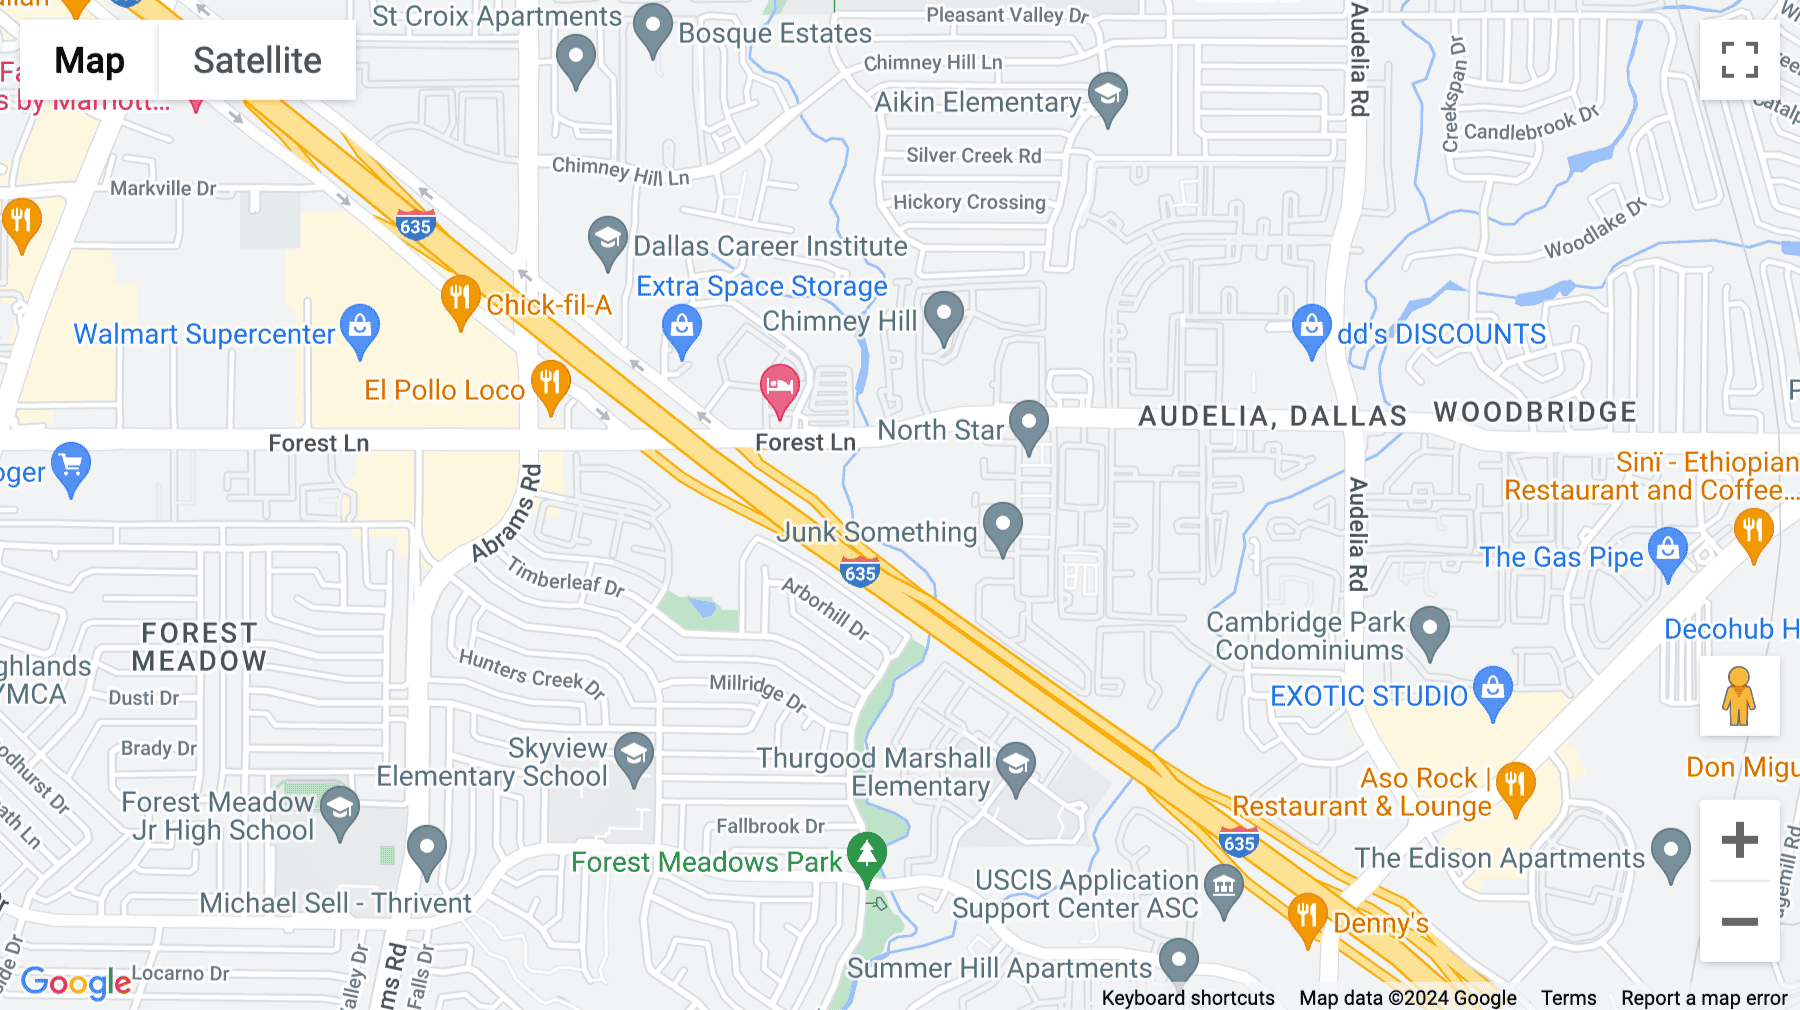 Click for interative map of 9550 Forest Lane, Dallas